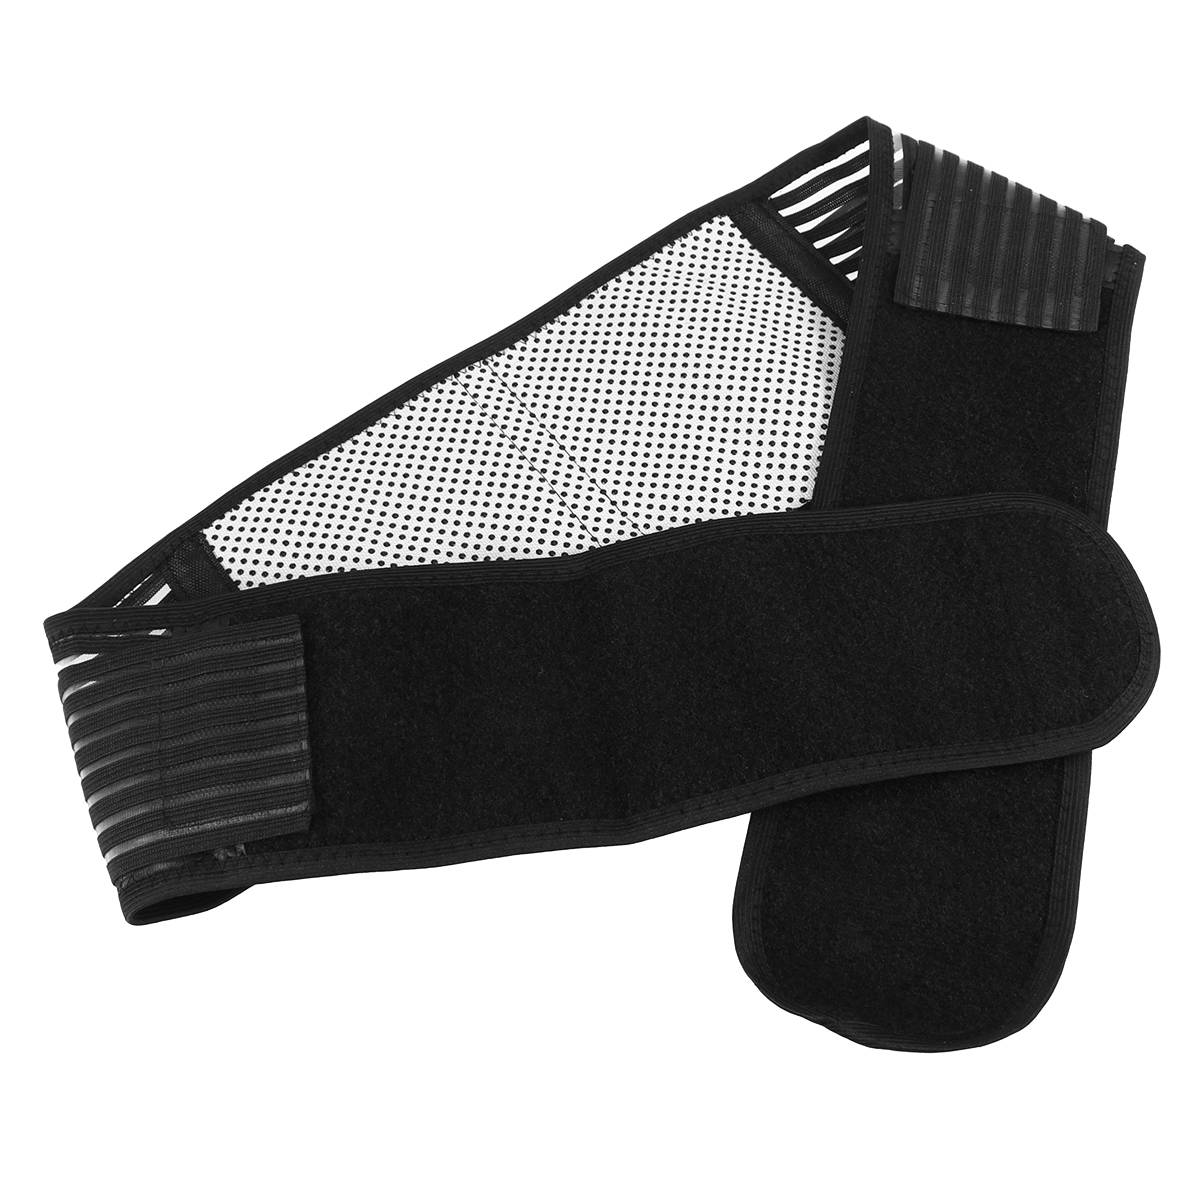 Special Design for Shoulder Support Brace - Pain Relief Waist Back Brace Lumbar Support WS-17 – Honest